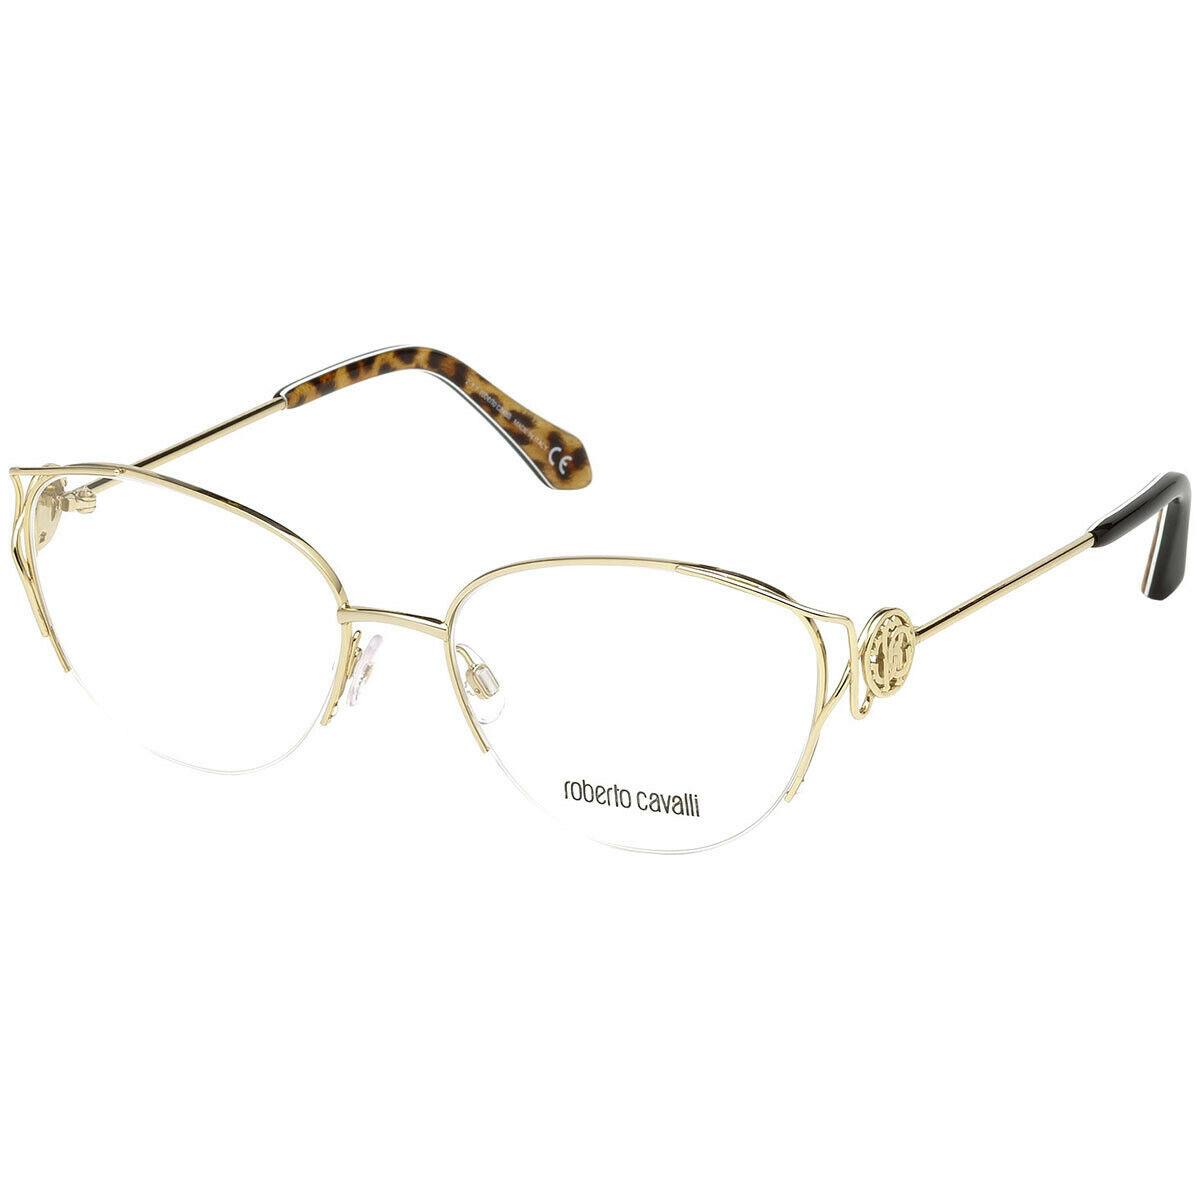 Roberto Cavalli Foiano RC 5052 032 Pale Gold Metal Eyeglasses Frame 54-17-130